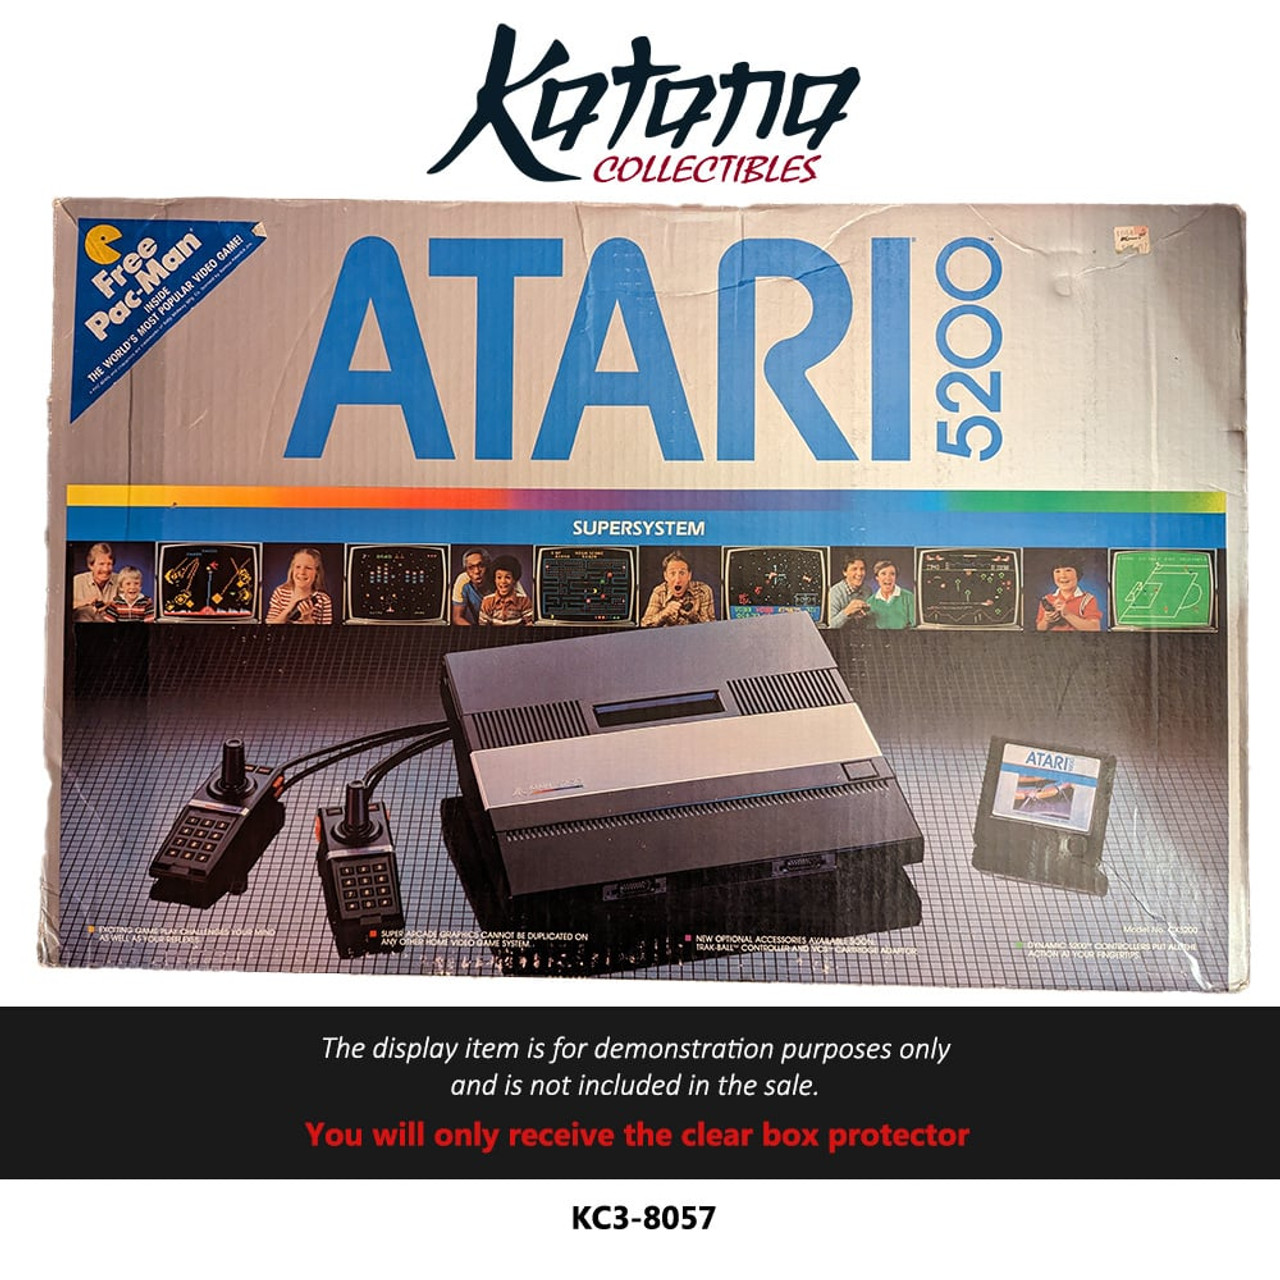 Katana Collectibles Protector For Atari 5200 Super System